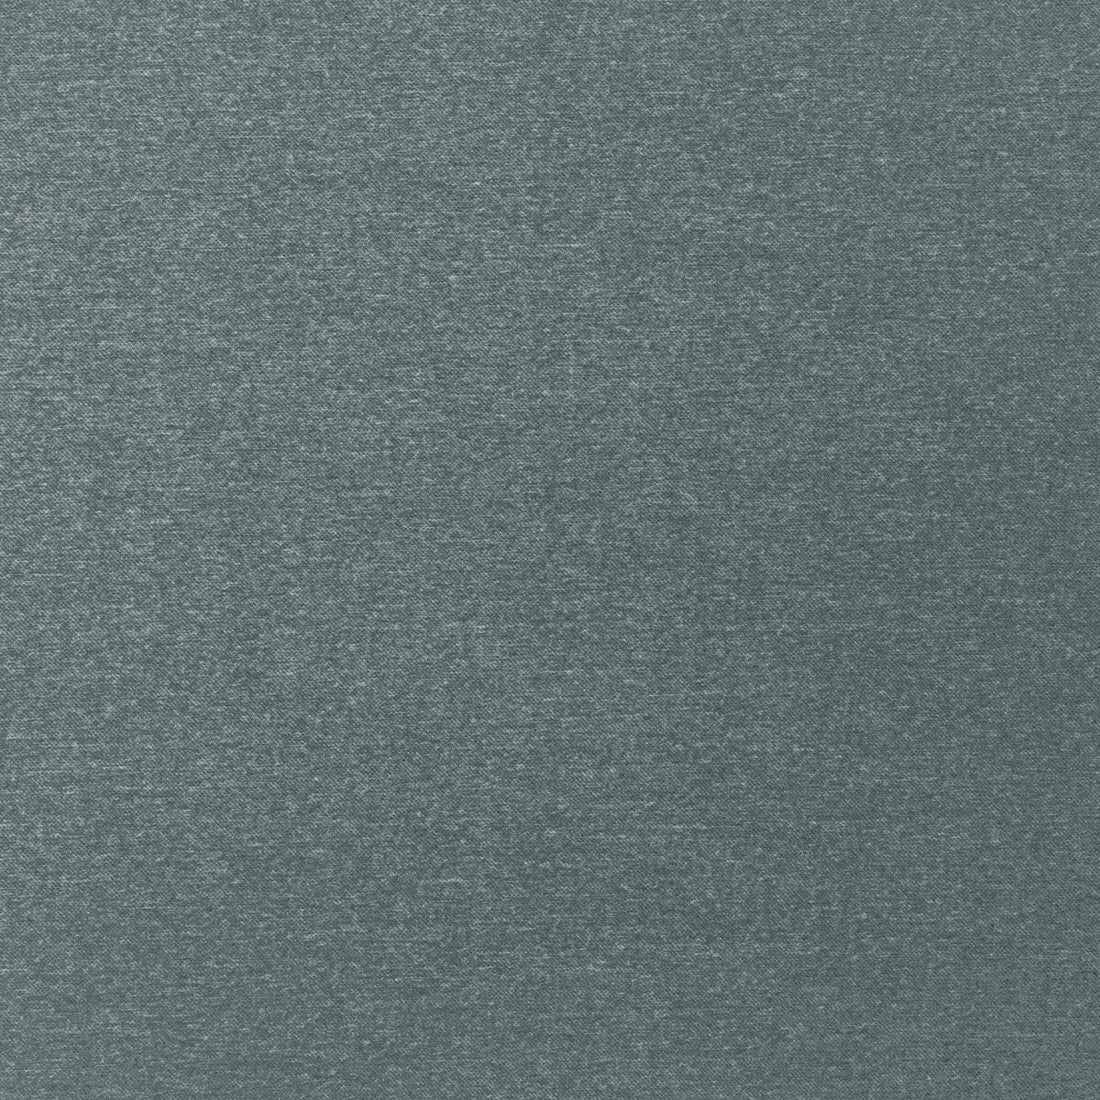 Kravet Smart fabric in 36110-511 color - pattern 36110.511.0 - by Kravet Smart in the Performance Kravetarmor collection